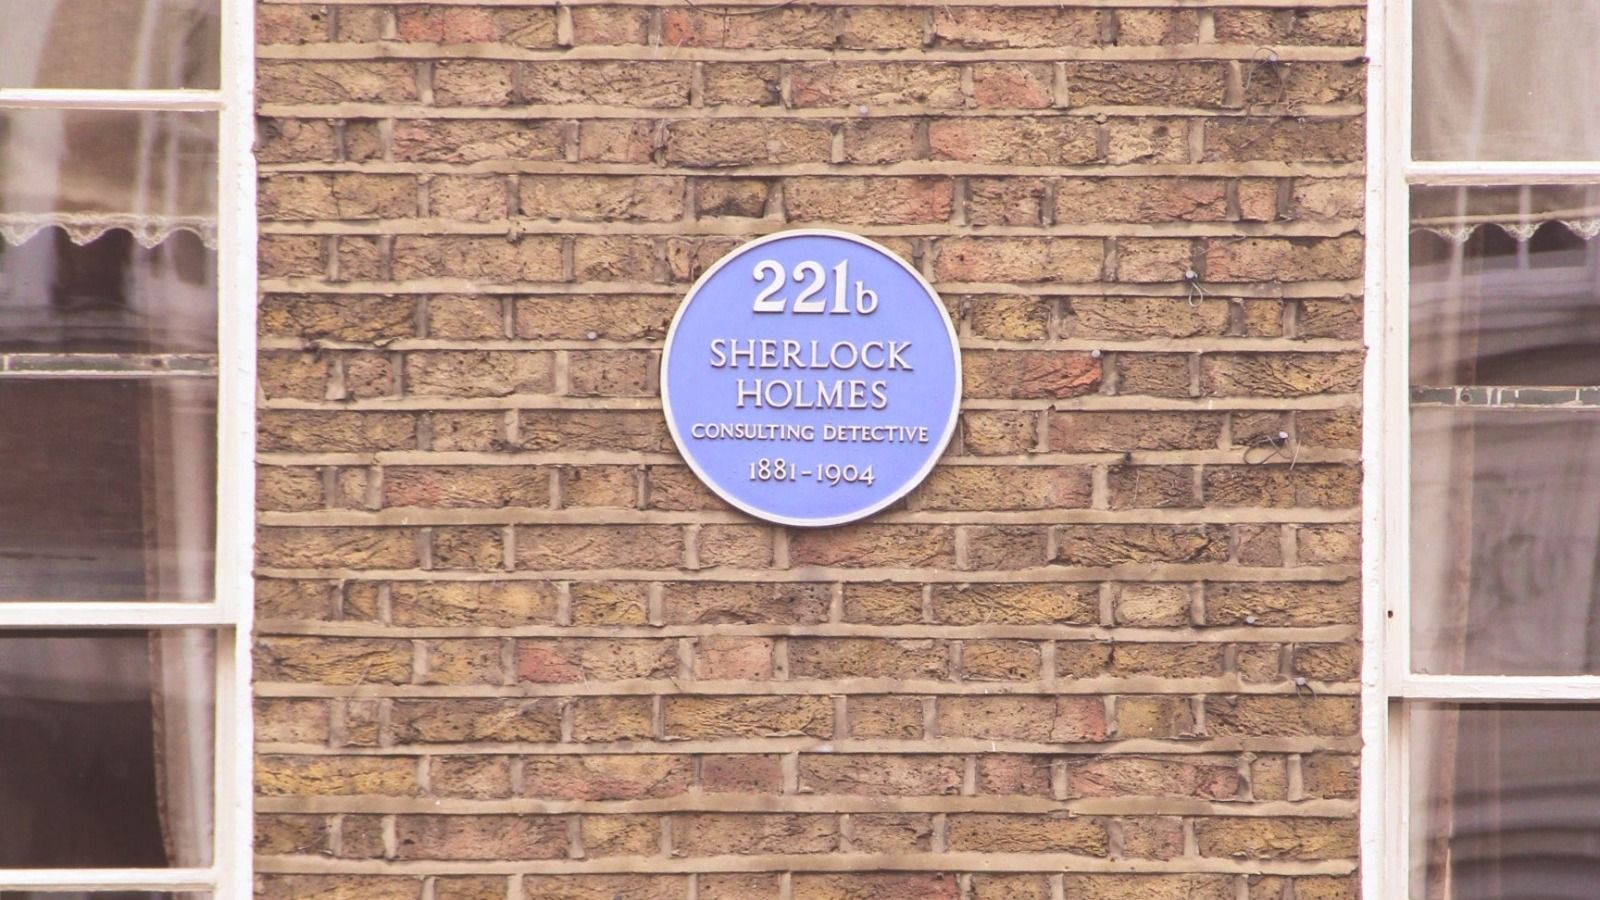 Papan nomor rumah Sherlock Holmes - Museum Sherlock Holmes Inggris